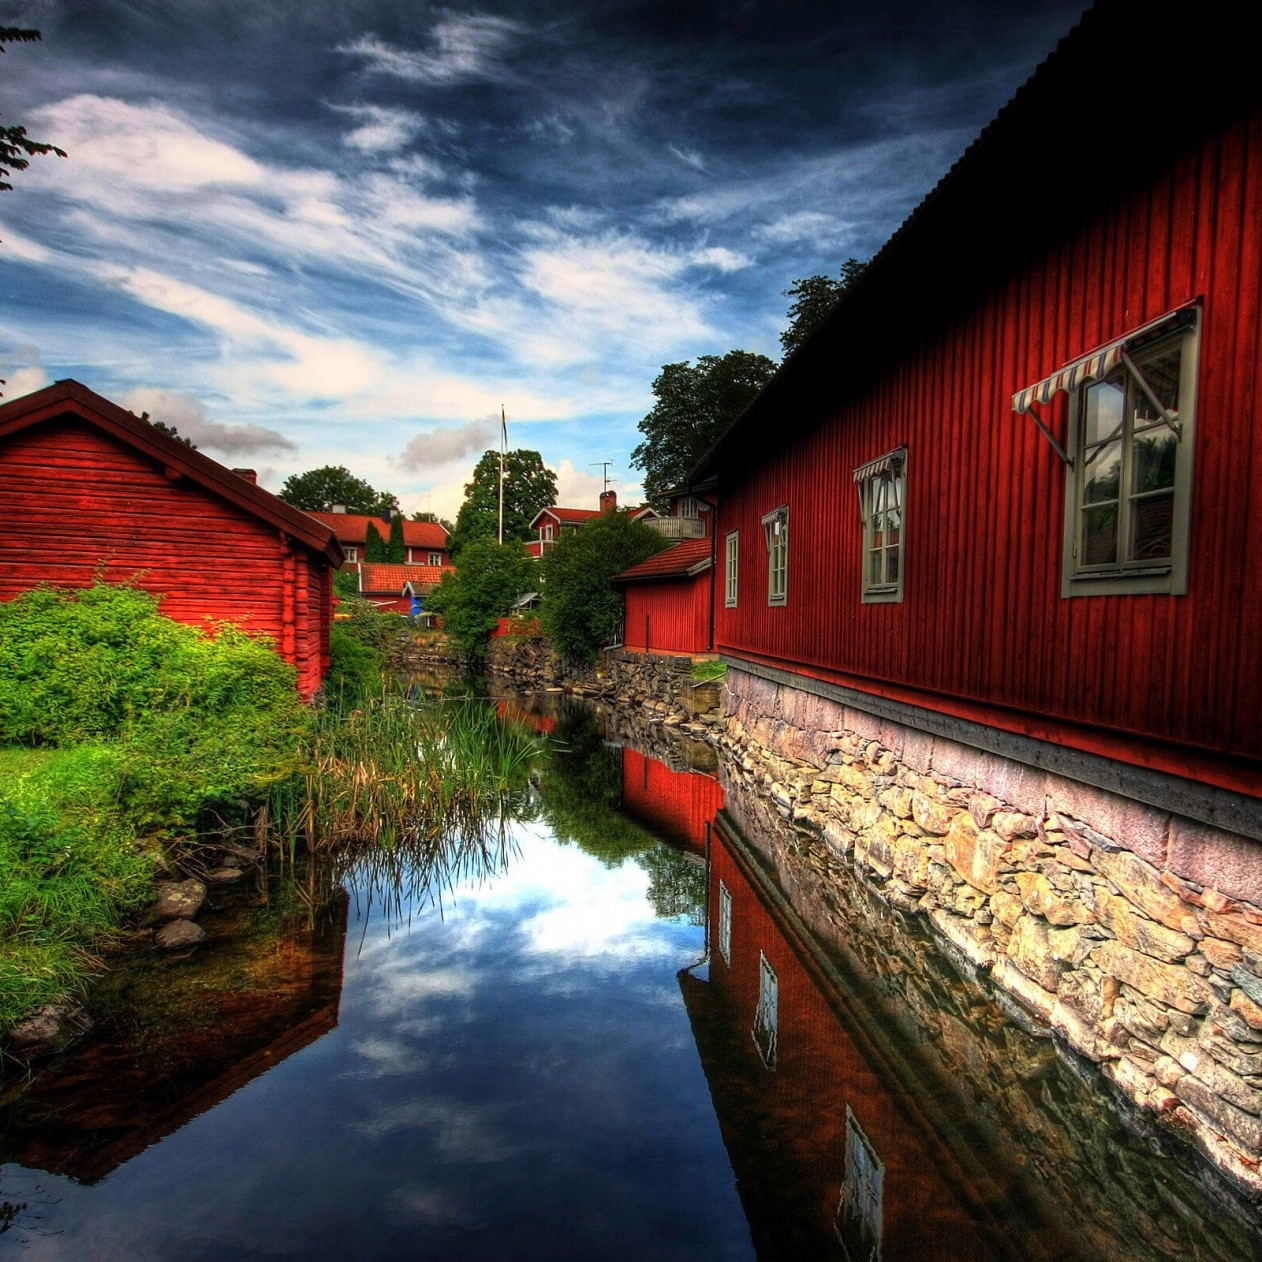 Red Village, Norberg, Sweden Wallpaper for Apple iPad mini